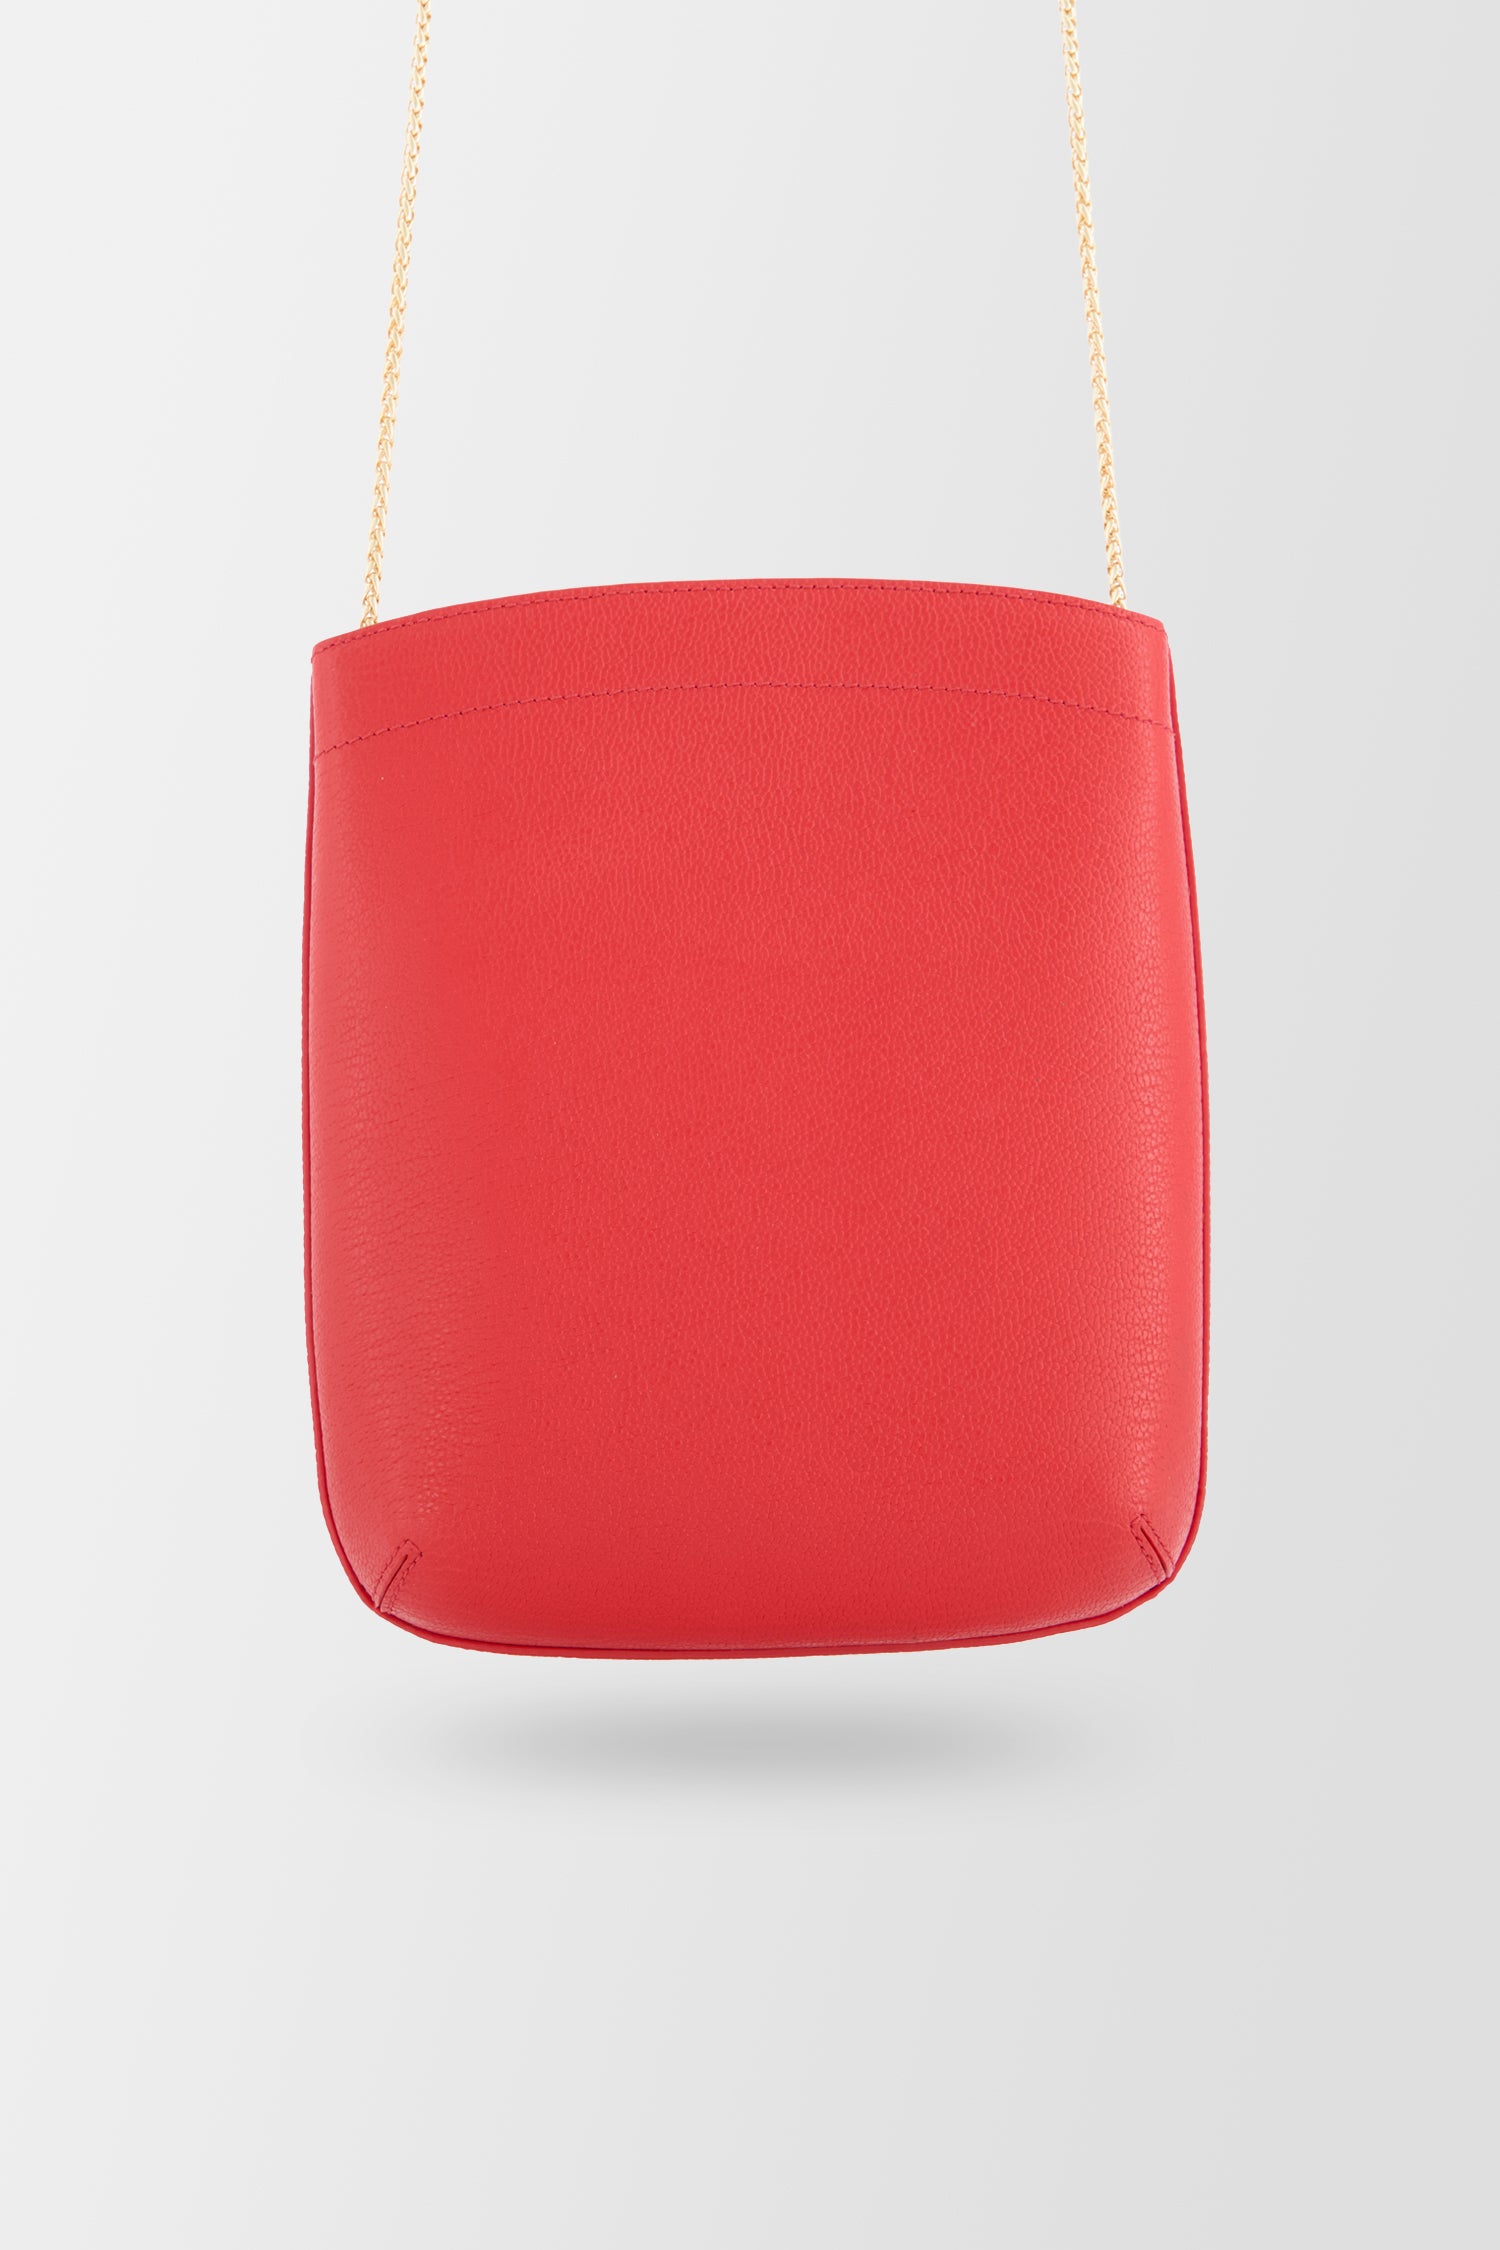 The Volon Orange Red E.Z. Carry Leather Bag